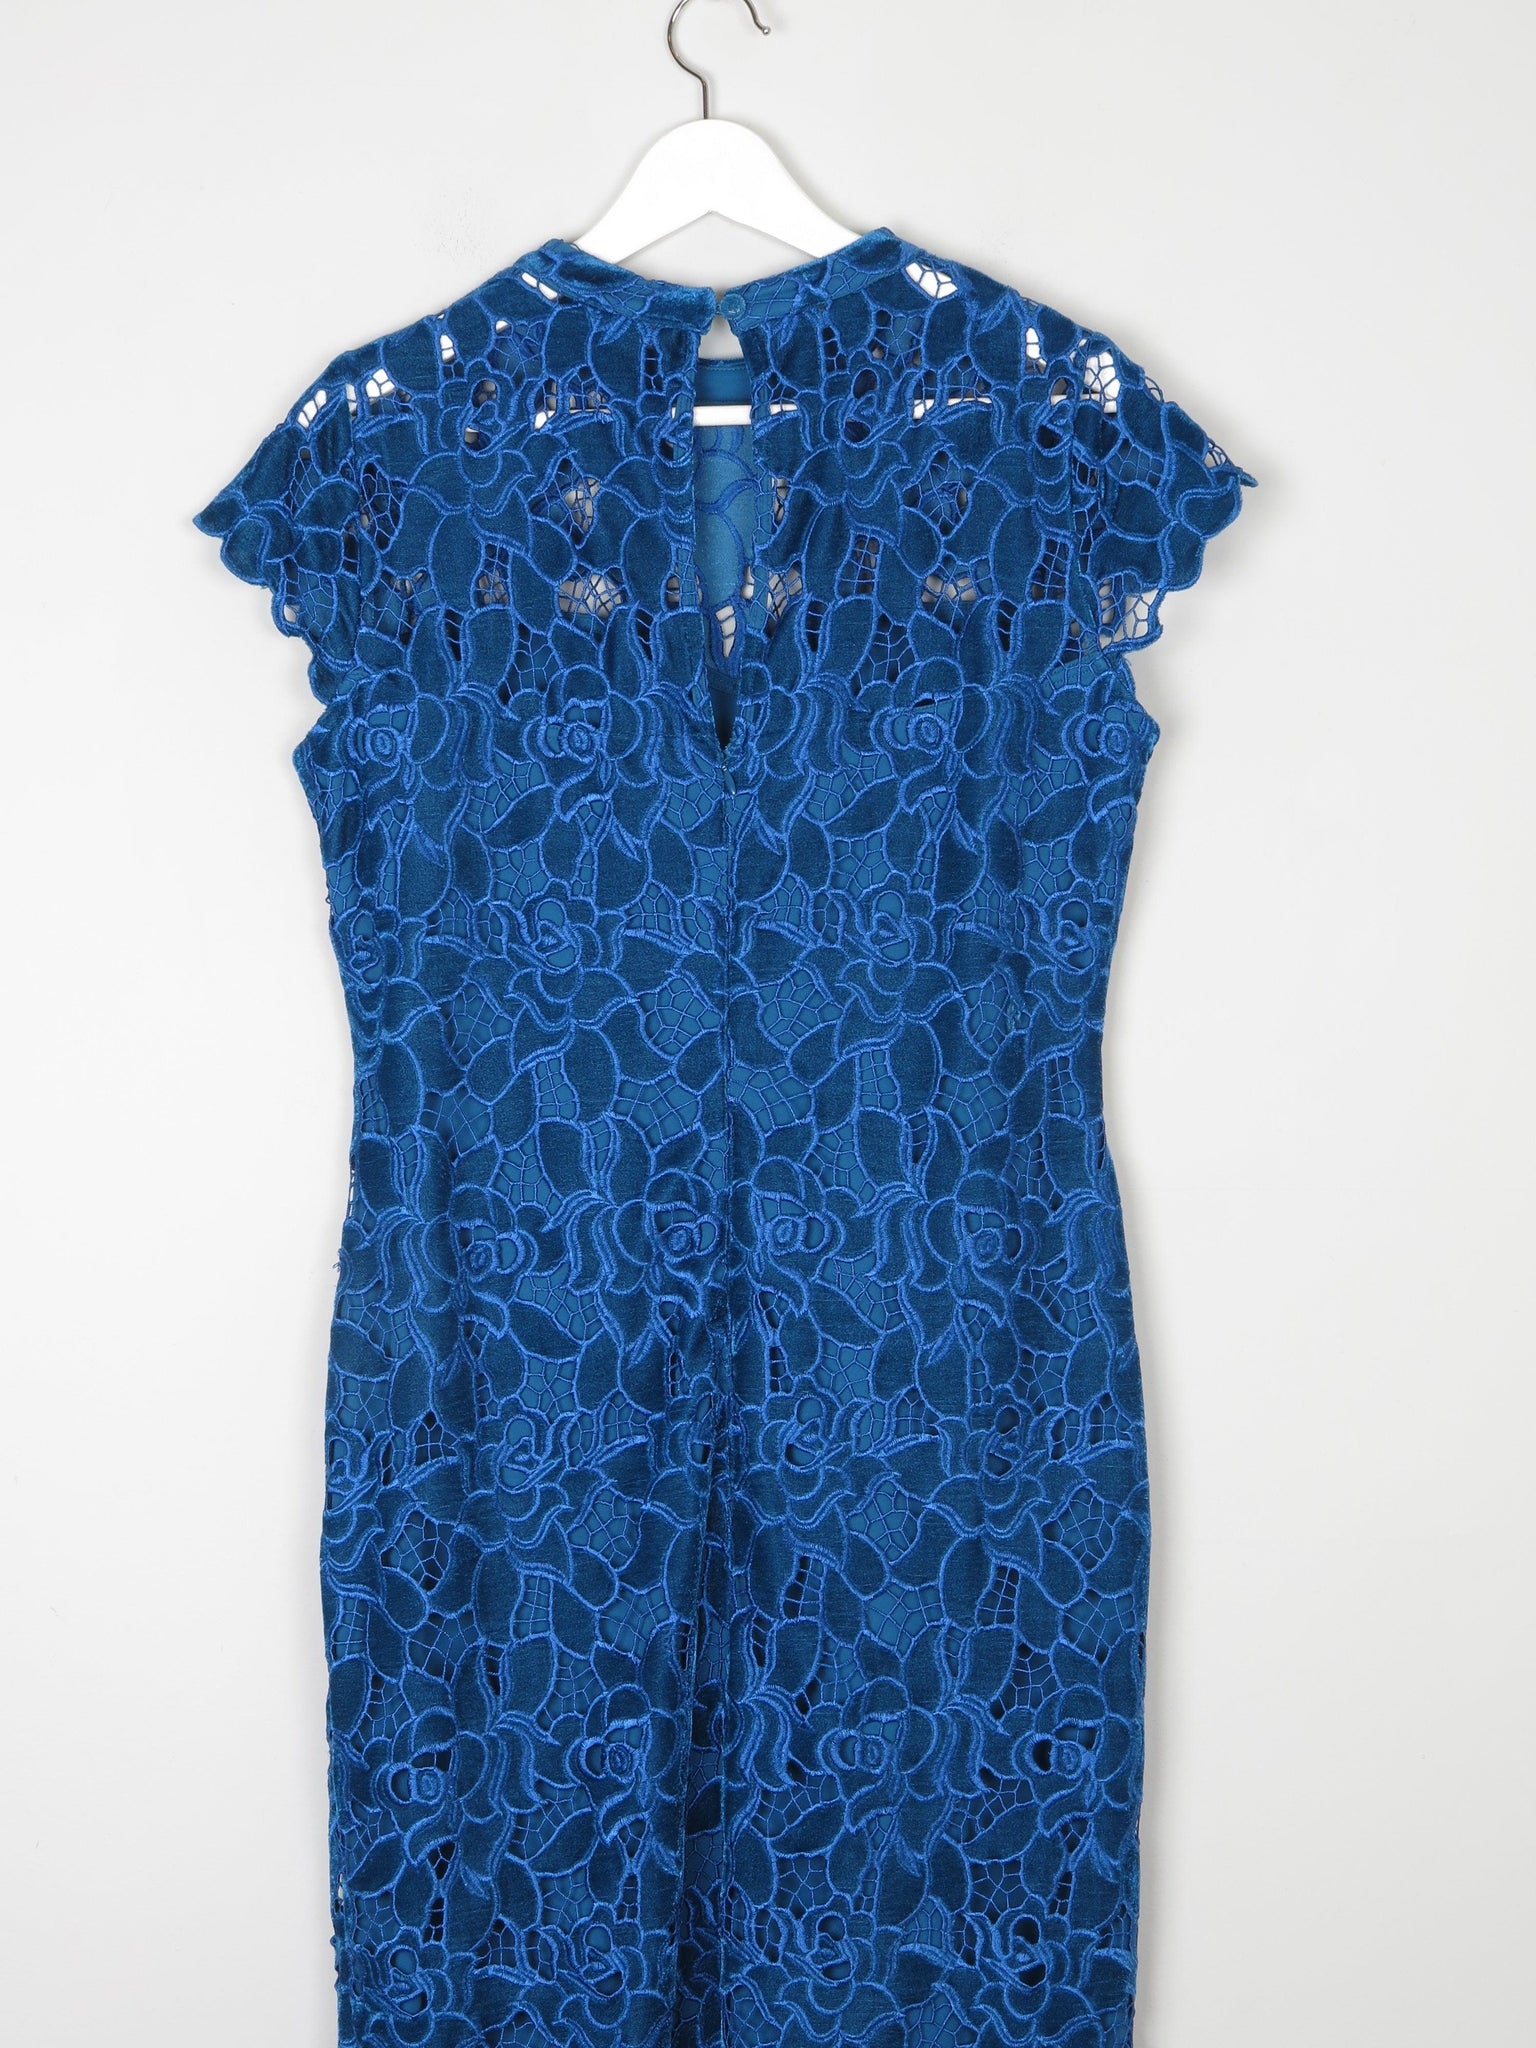 Petrol Blue Lace Vintage Style Velvet Dress 12 New - The Harlequin